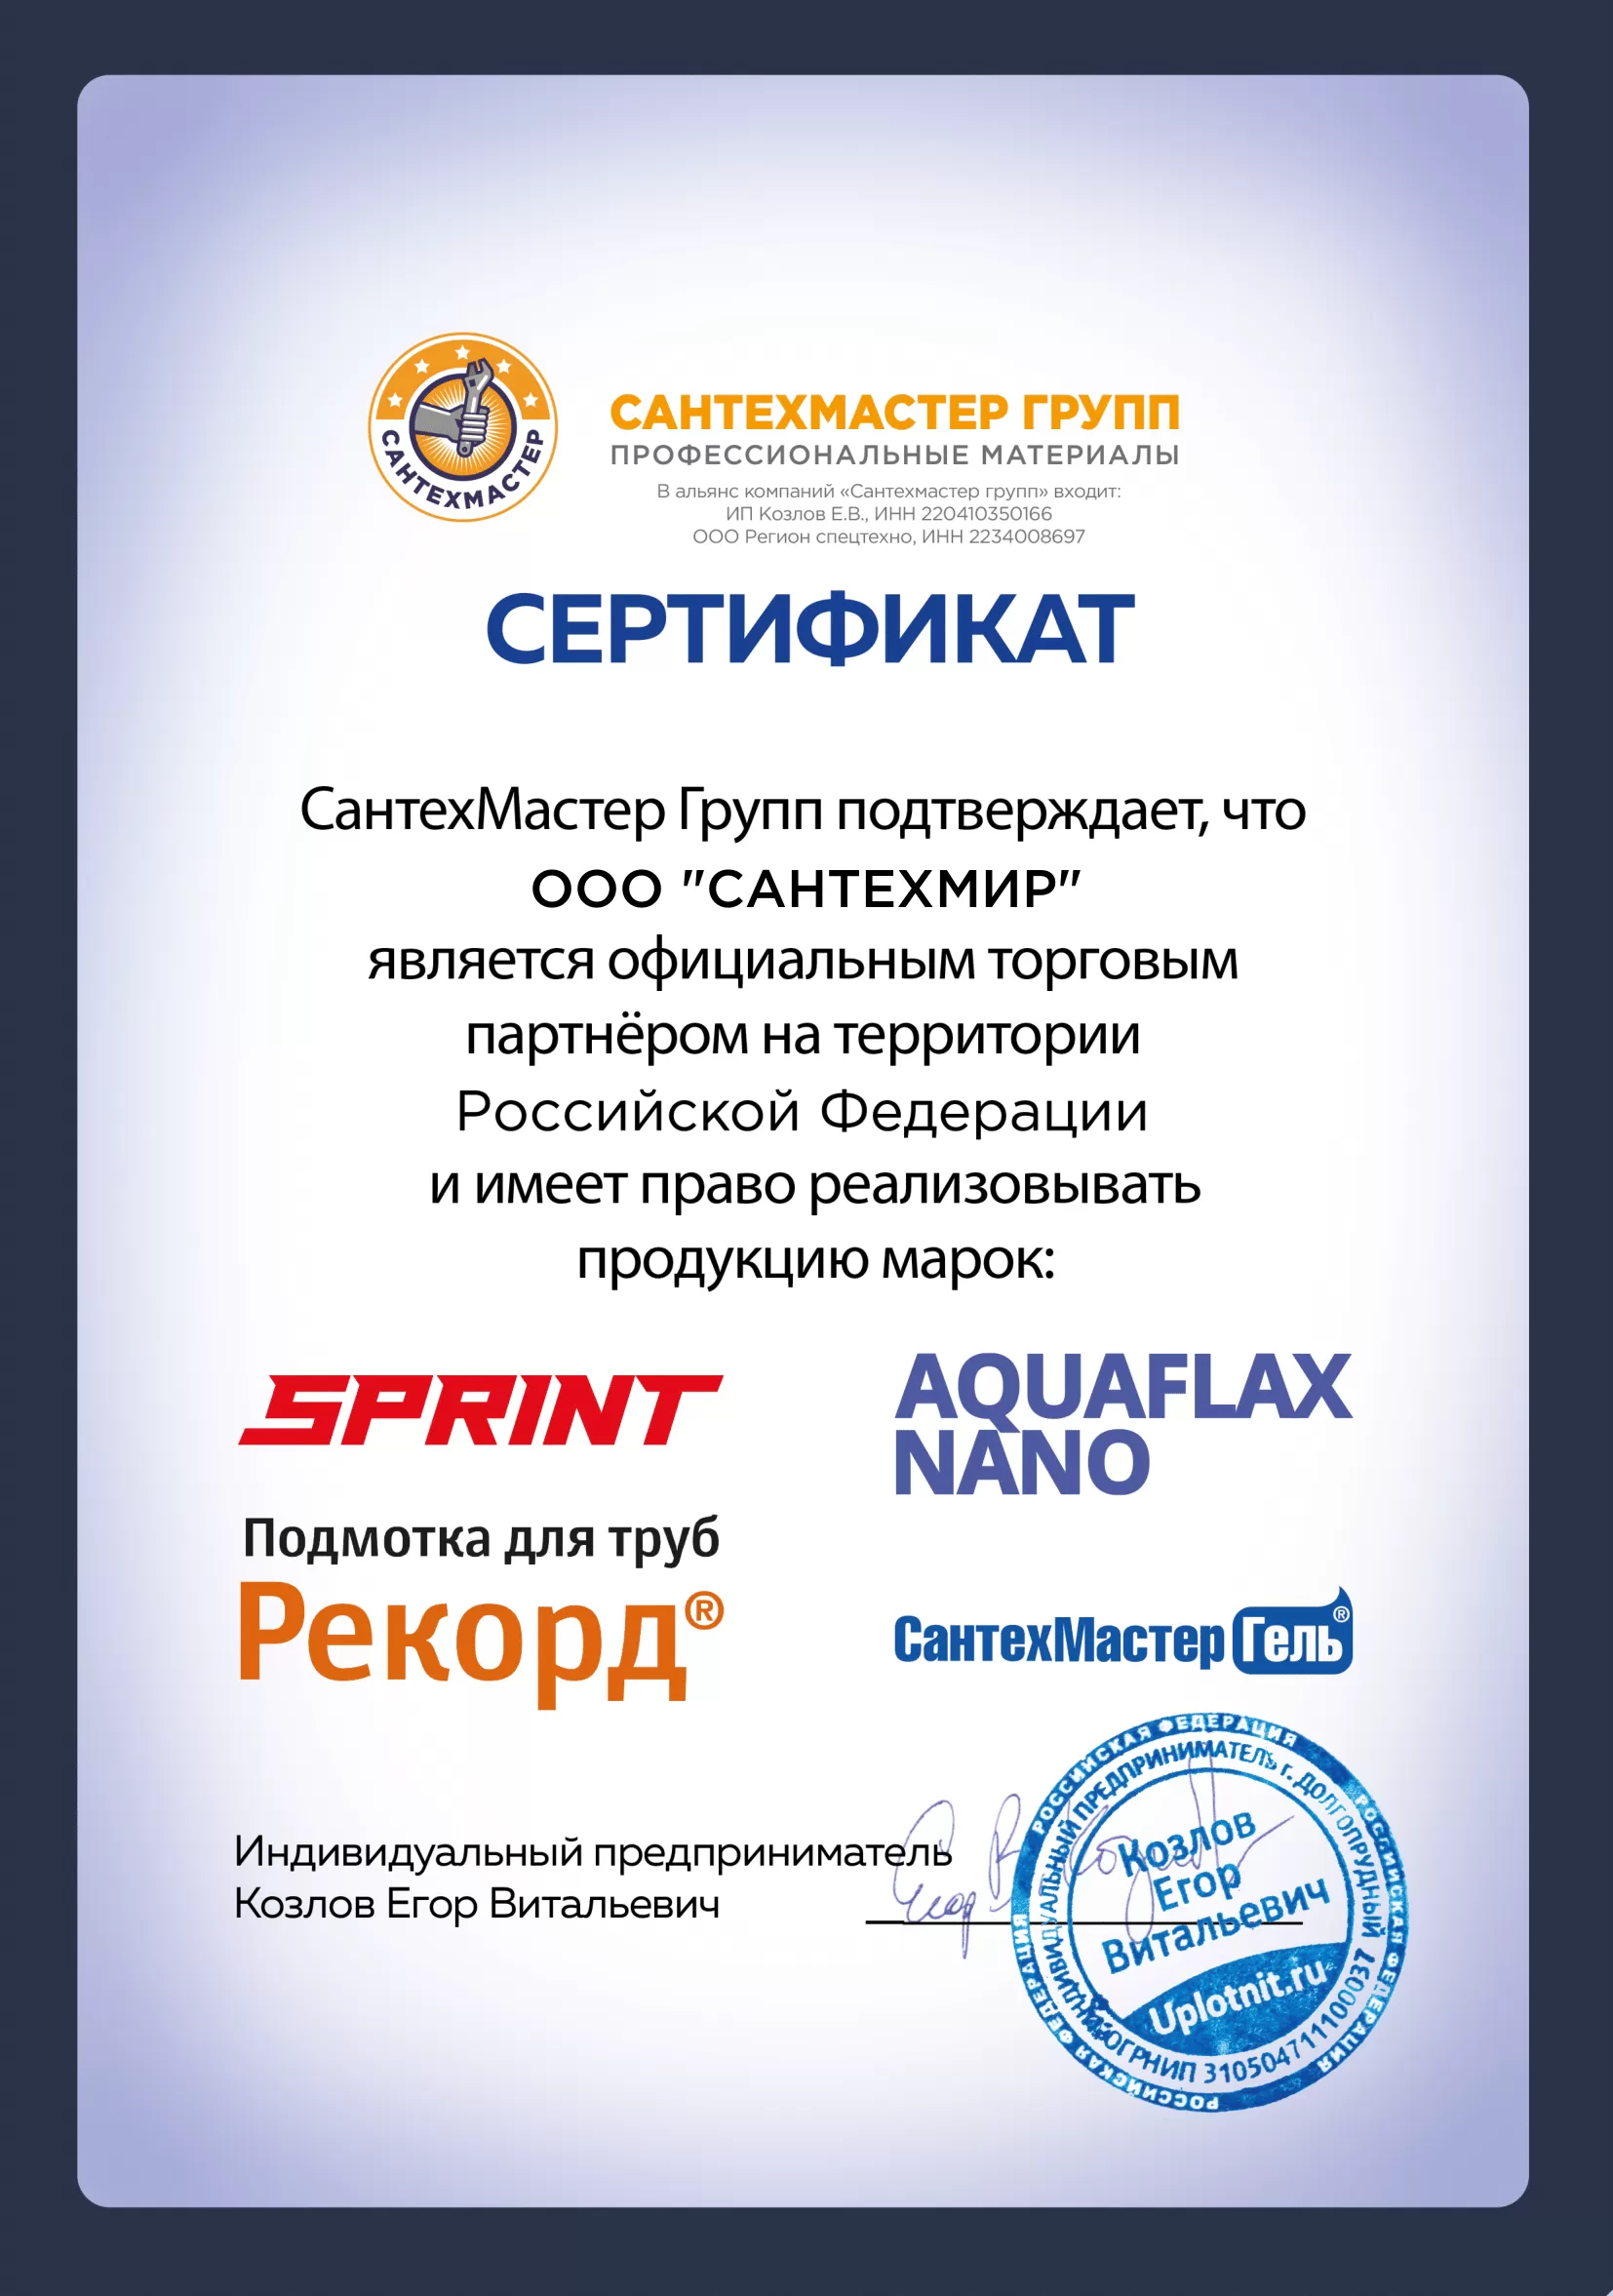 Сертификат о брендах Sprint, Aquaflax nano, Рекорд, СантехМастер Гель